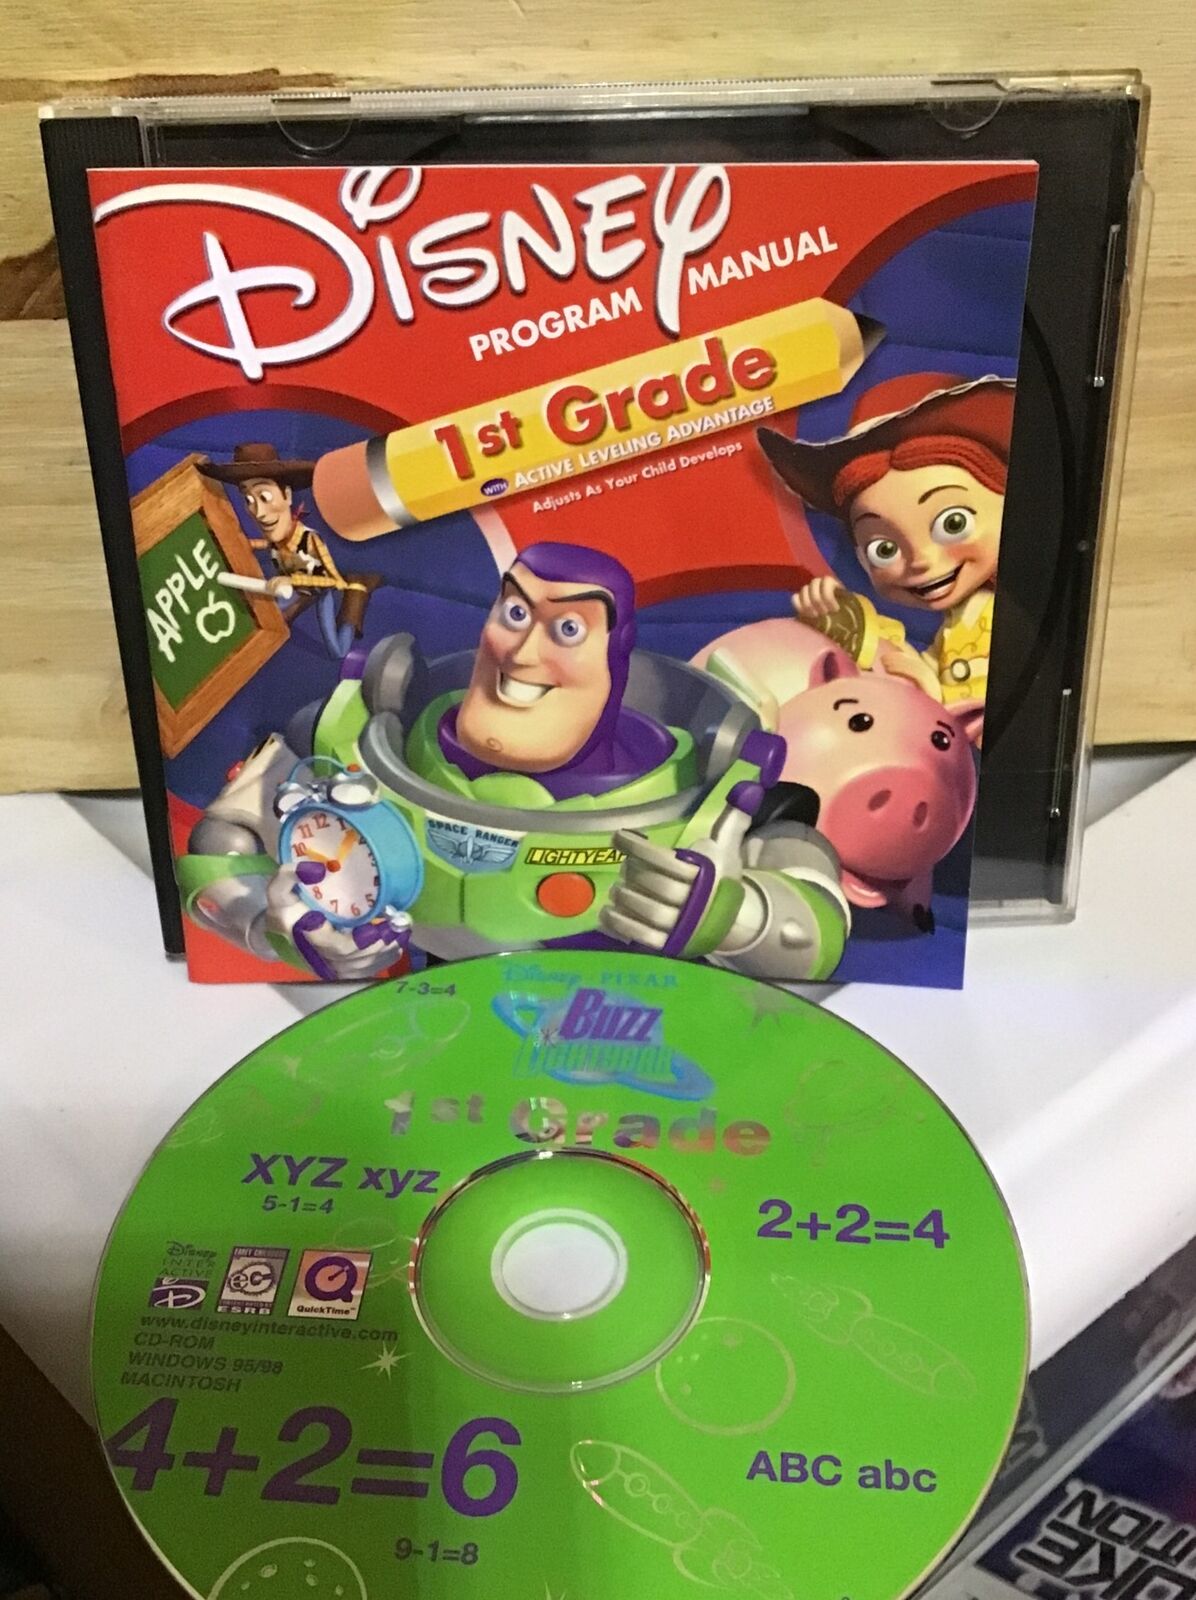 Disney Pixar\'s Buzz Lightyear 1st Grade Program Manual CD - FAST SHIPPING